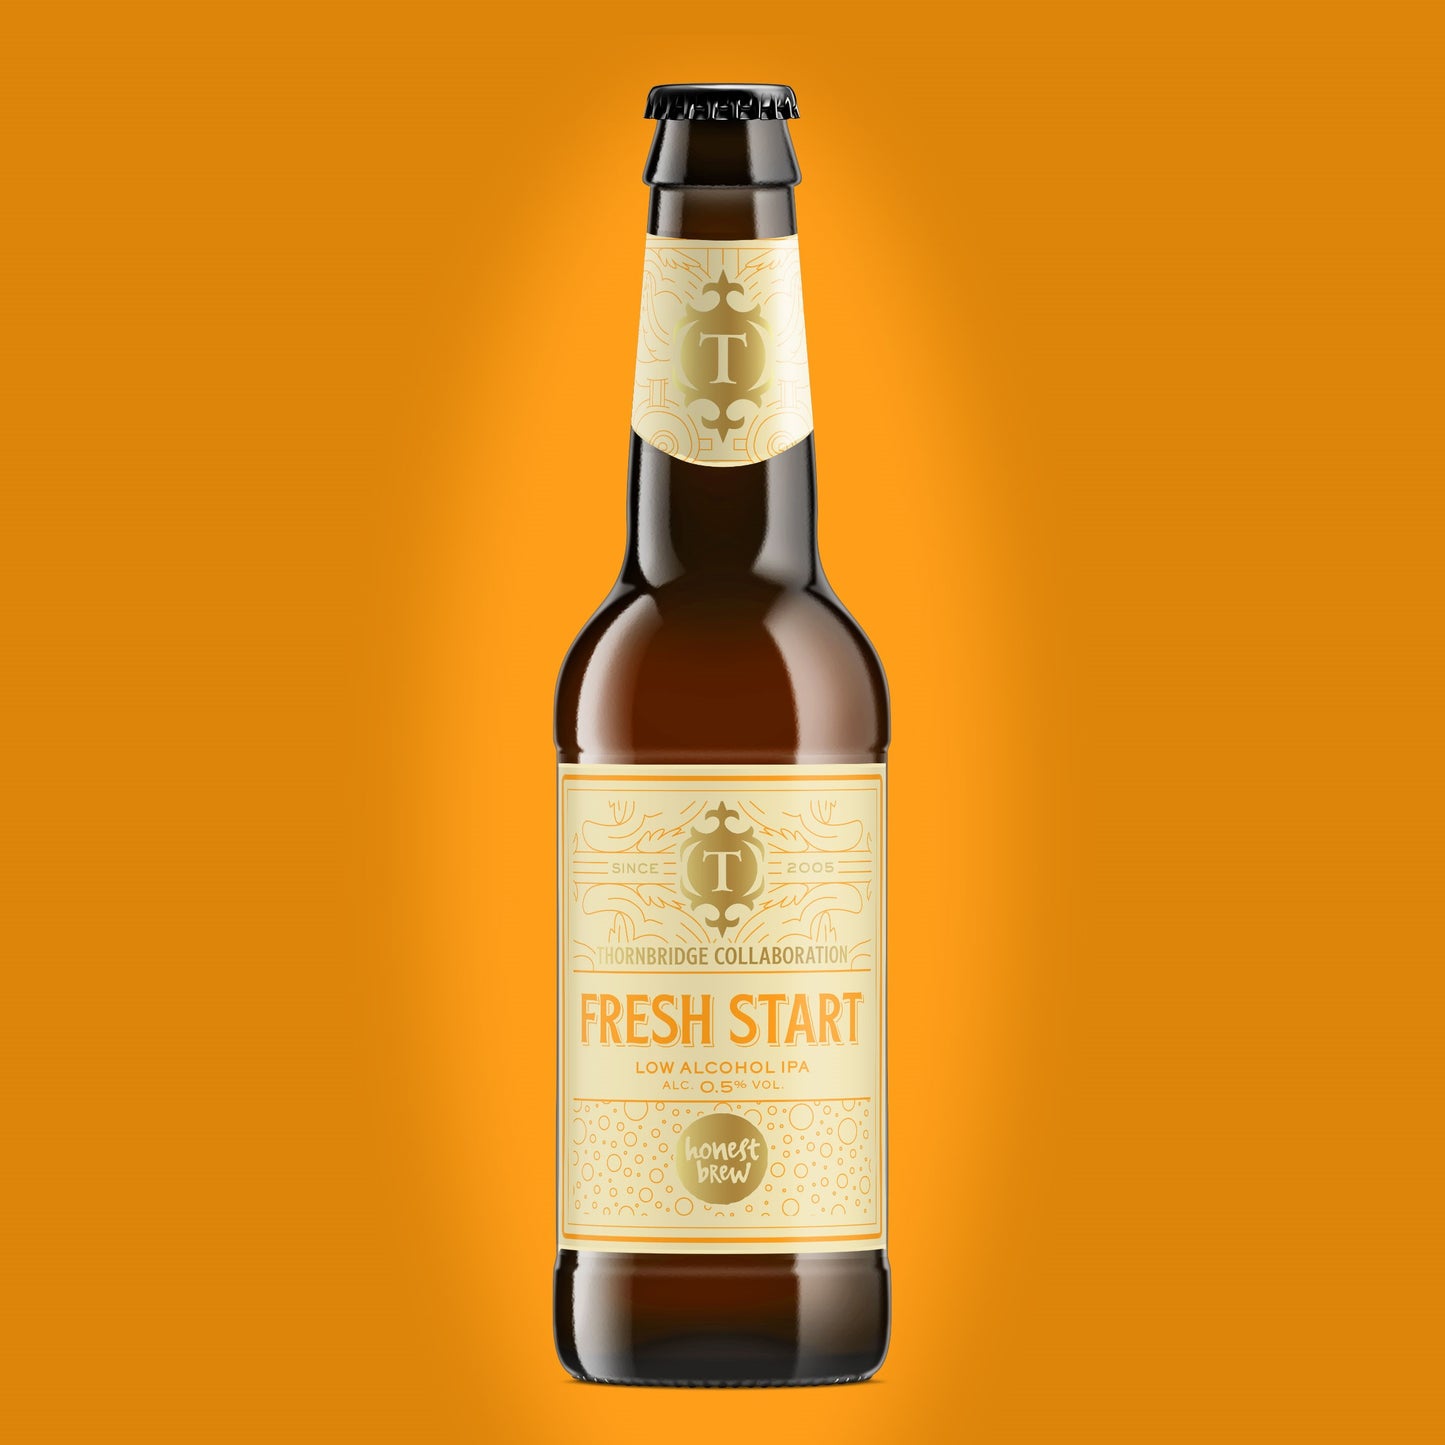 Fresh Start, 0.5% Low Alcohol IPA Beer - Single Bottle Thornbridge